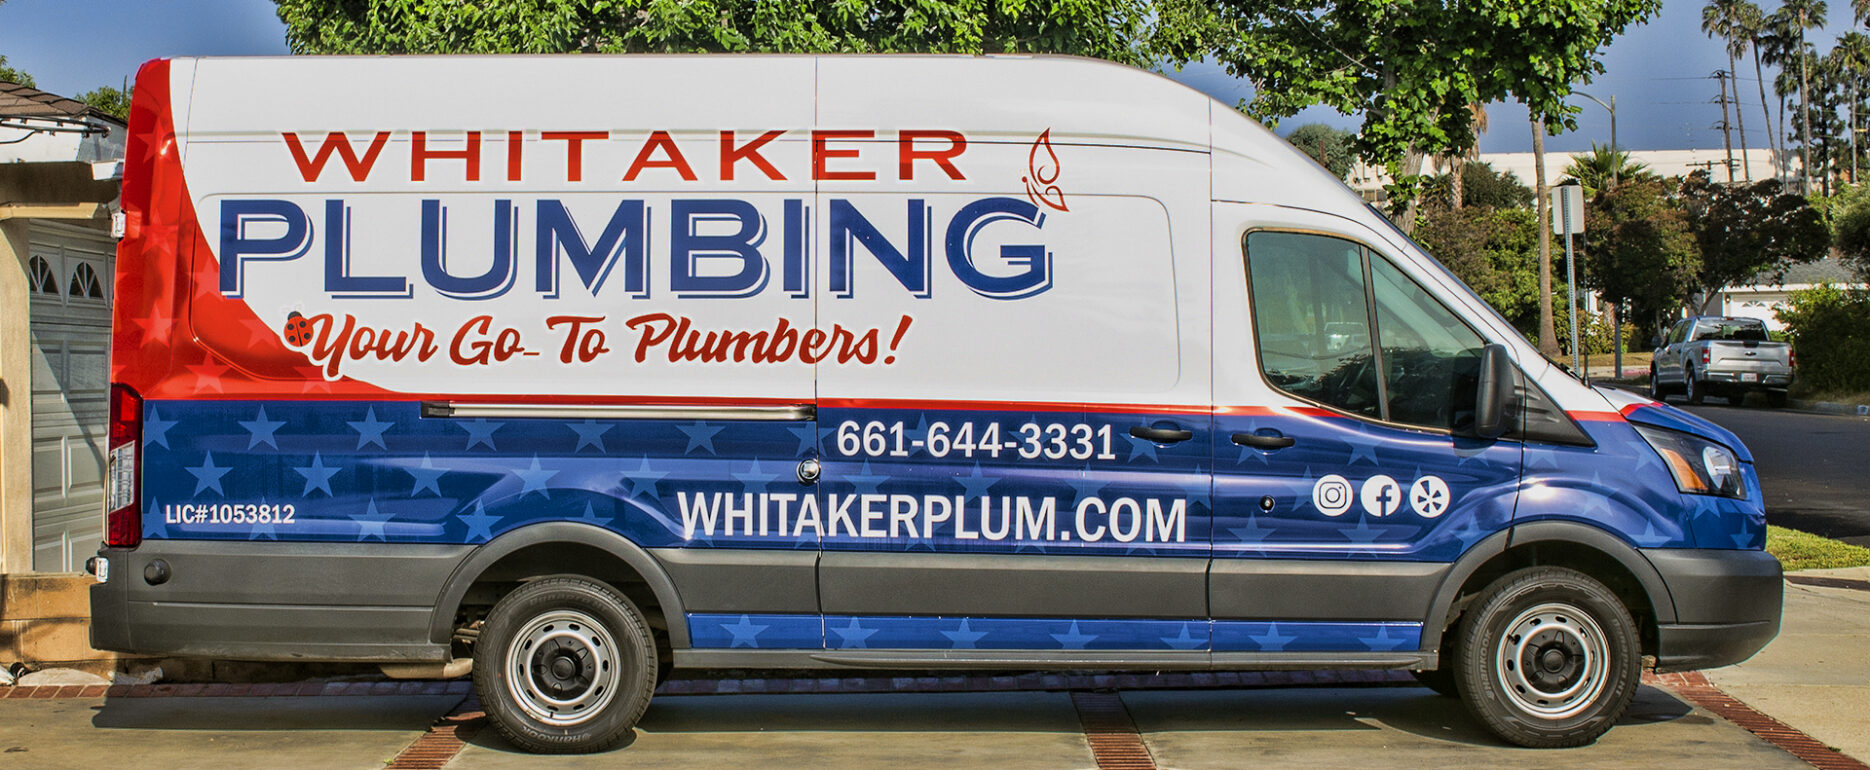 Whitaker Plumbing Truck - Santa Clarita Plumber